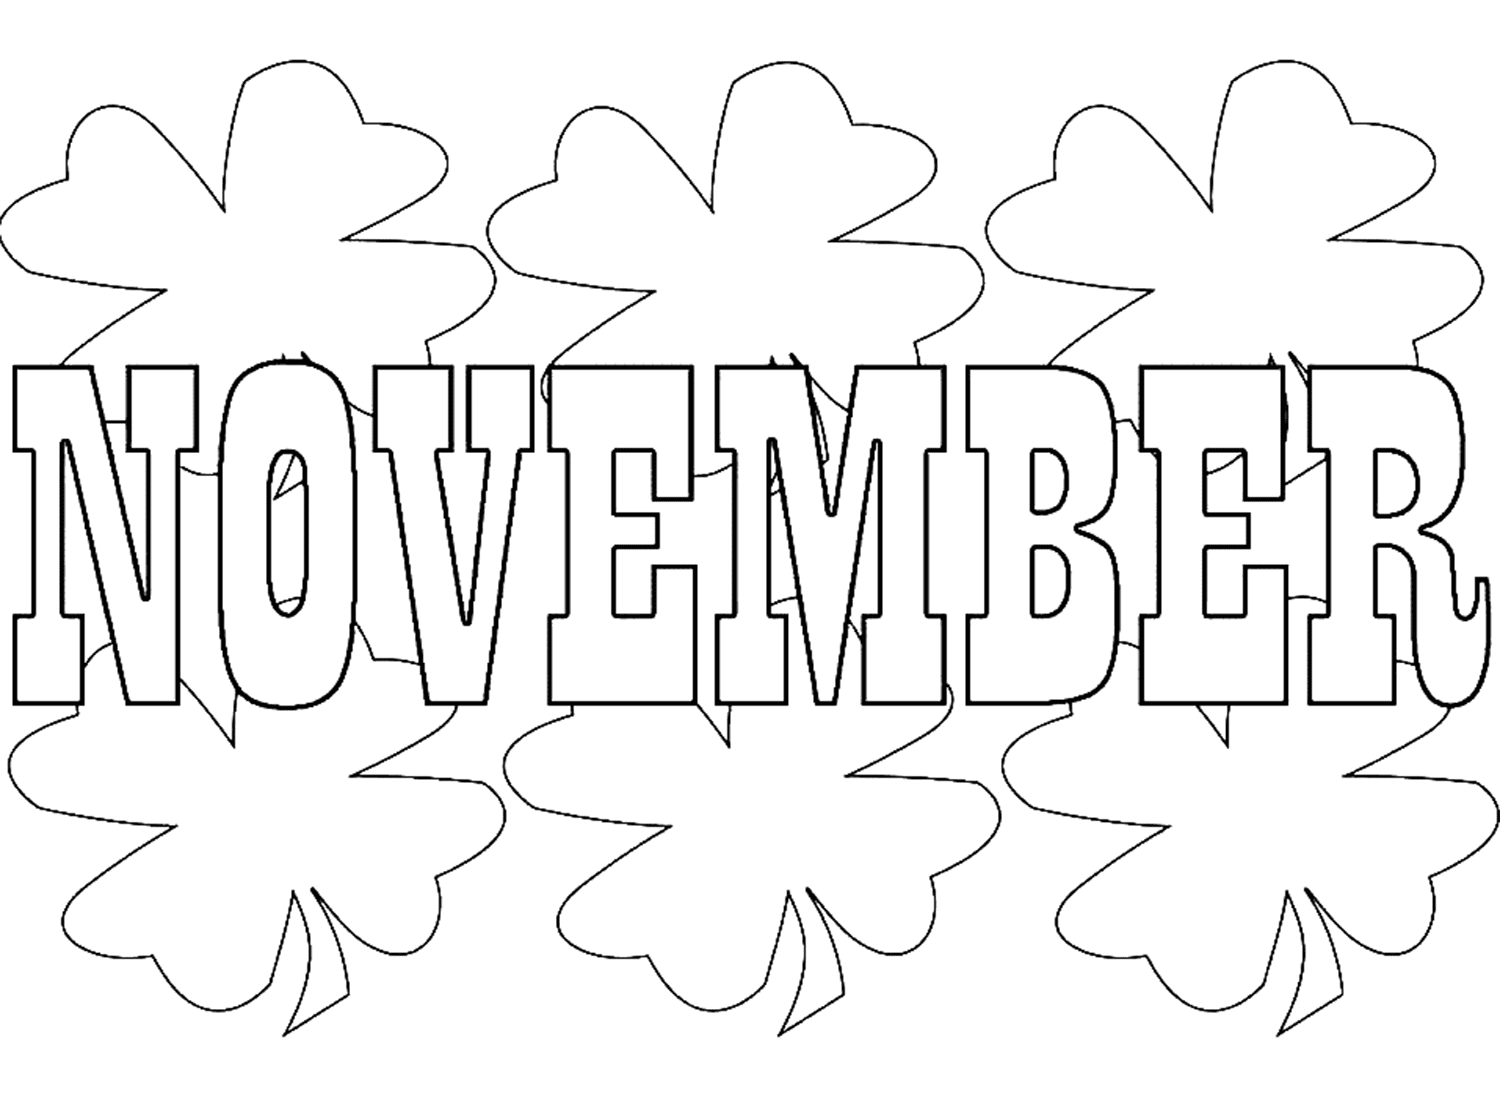 November Month Free from November